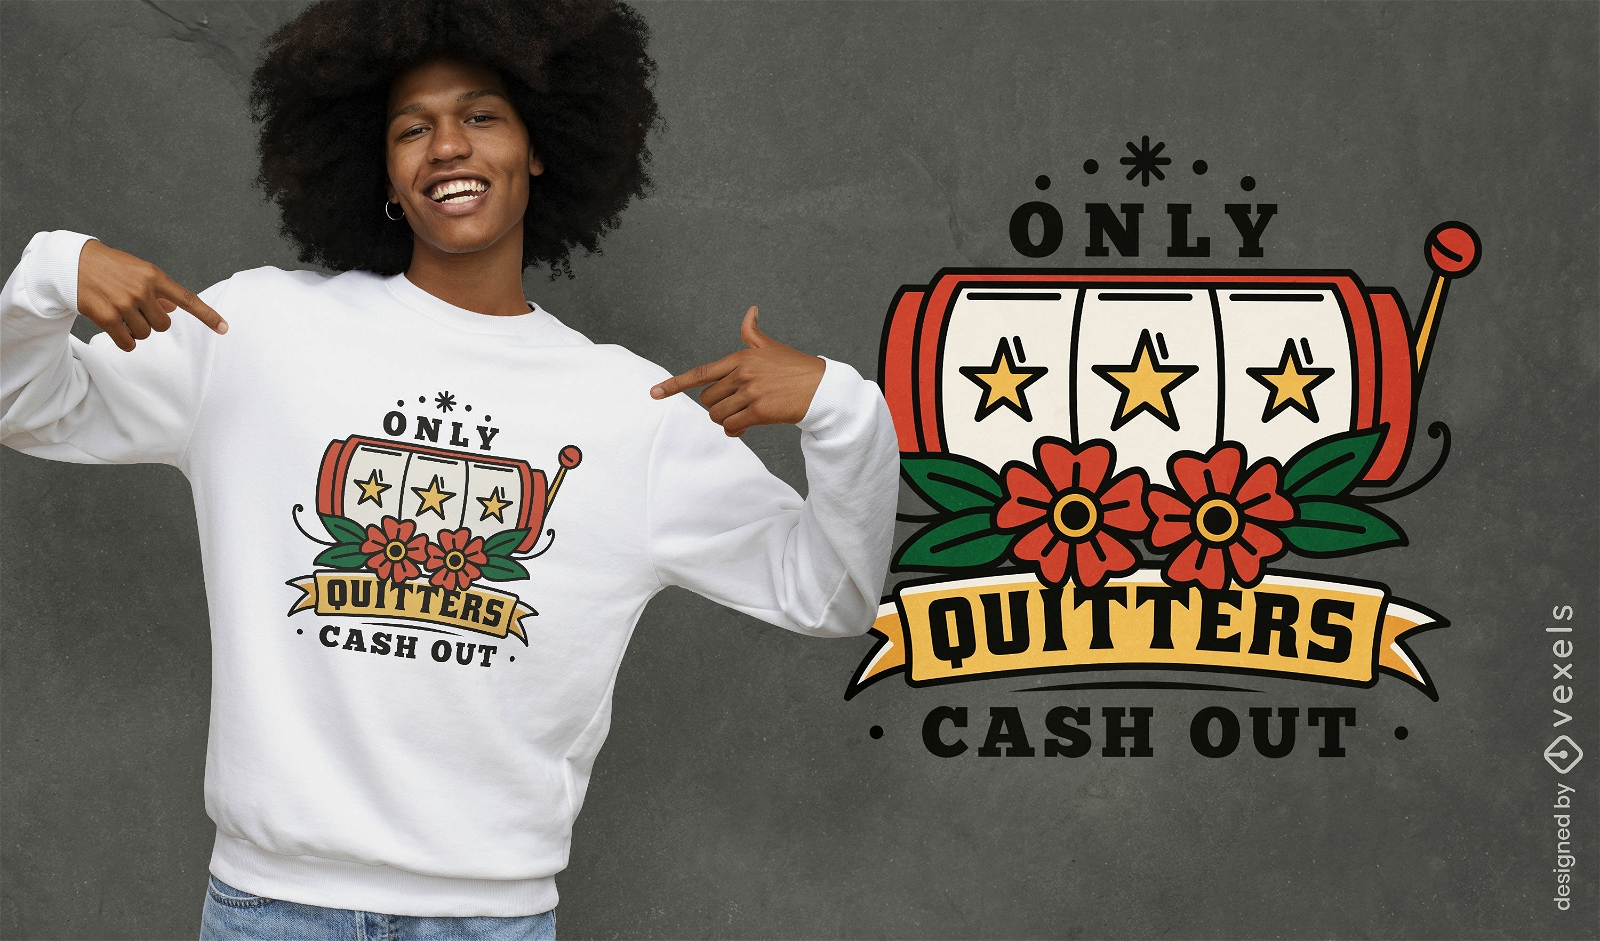 Quitters cash out t-shirt design